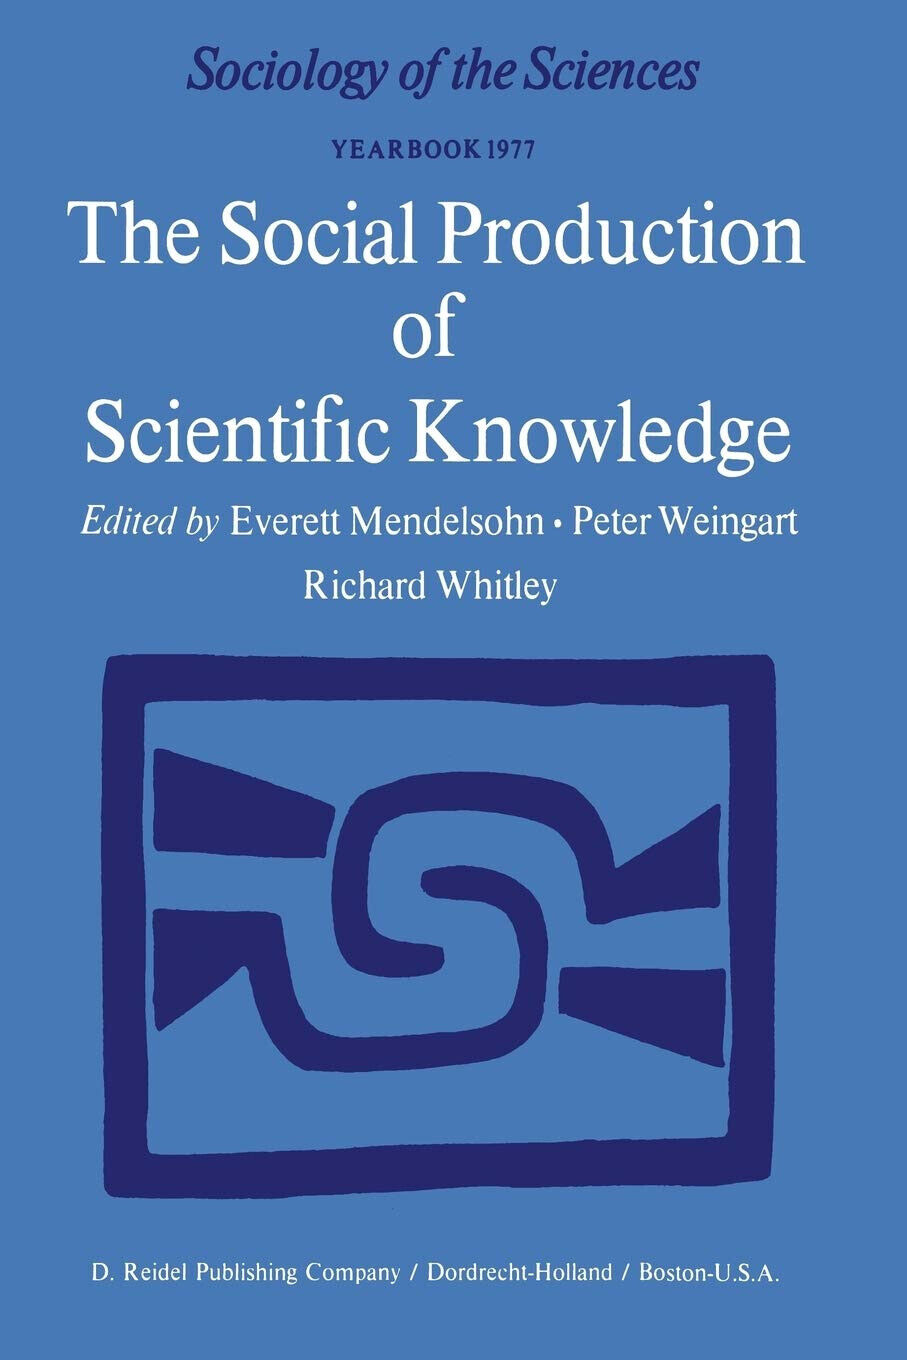 The Social Production of Scientific Knowledge - Everett Mendelsohn - 2013